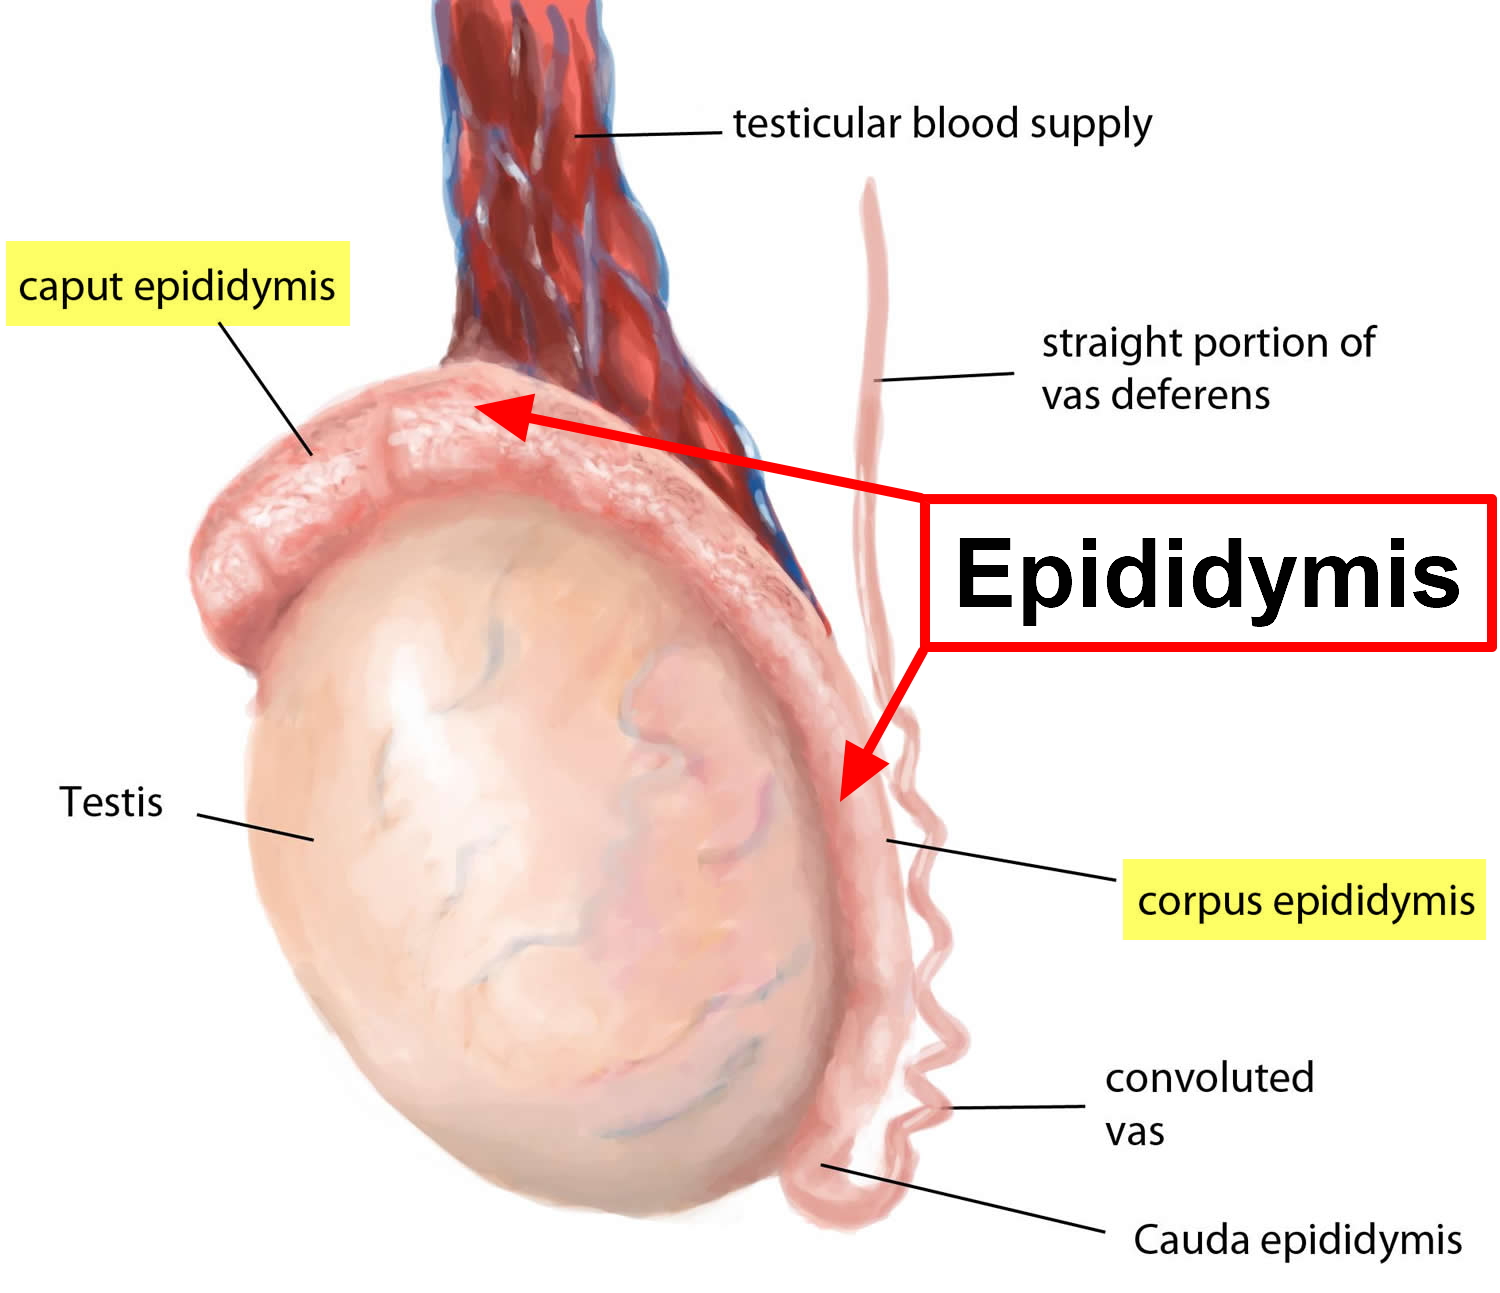 Does epididymitis go away on its own